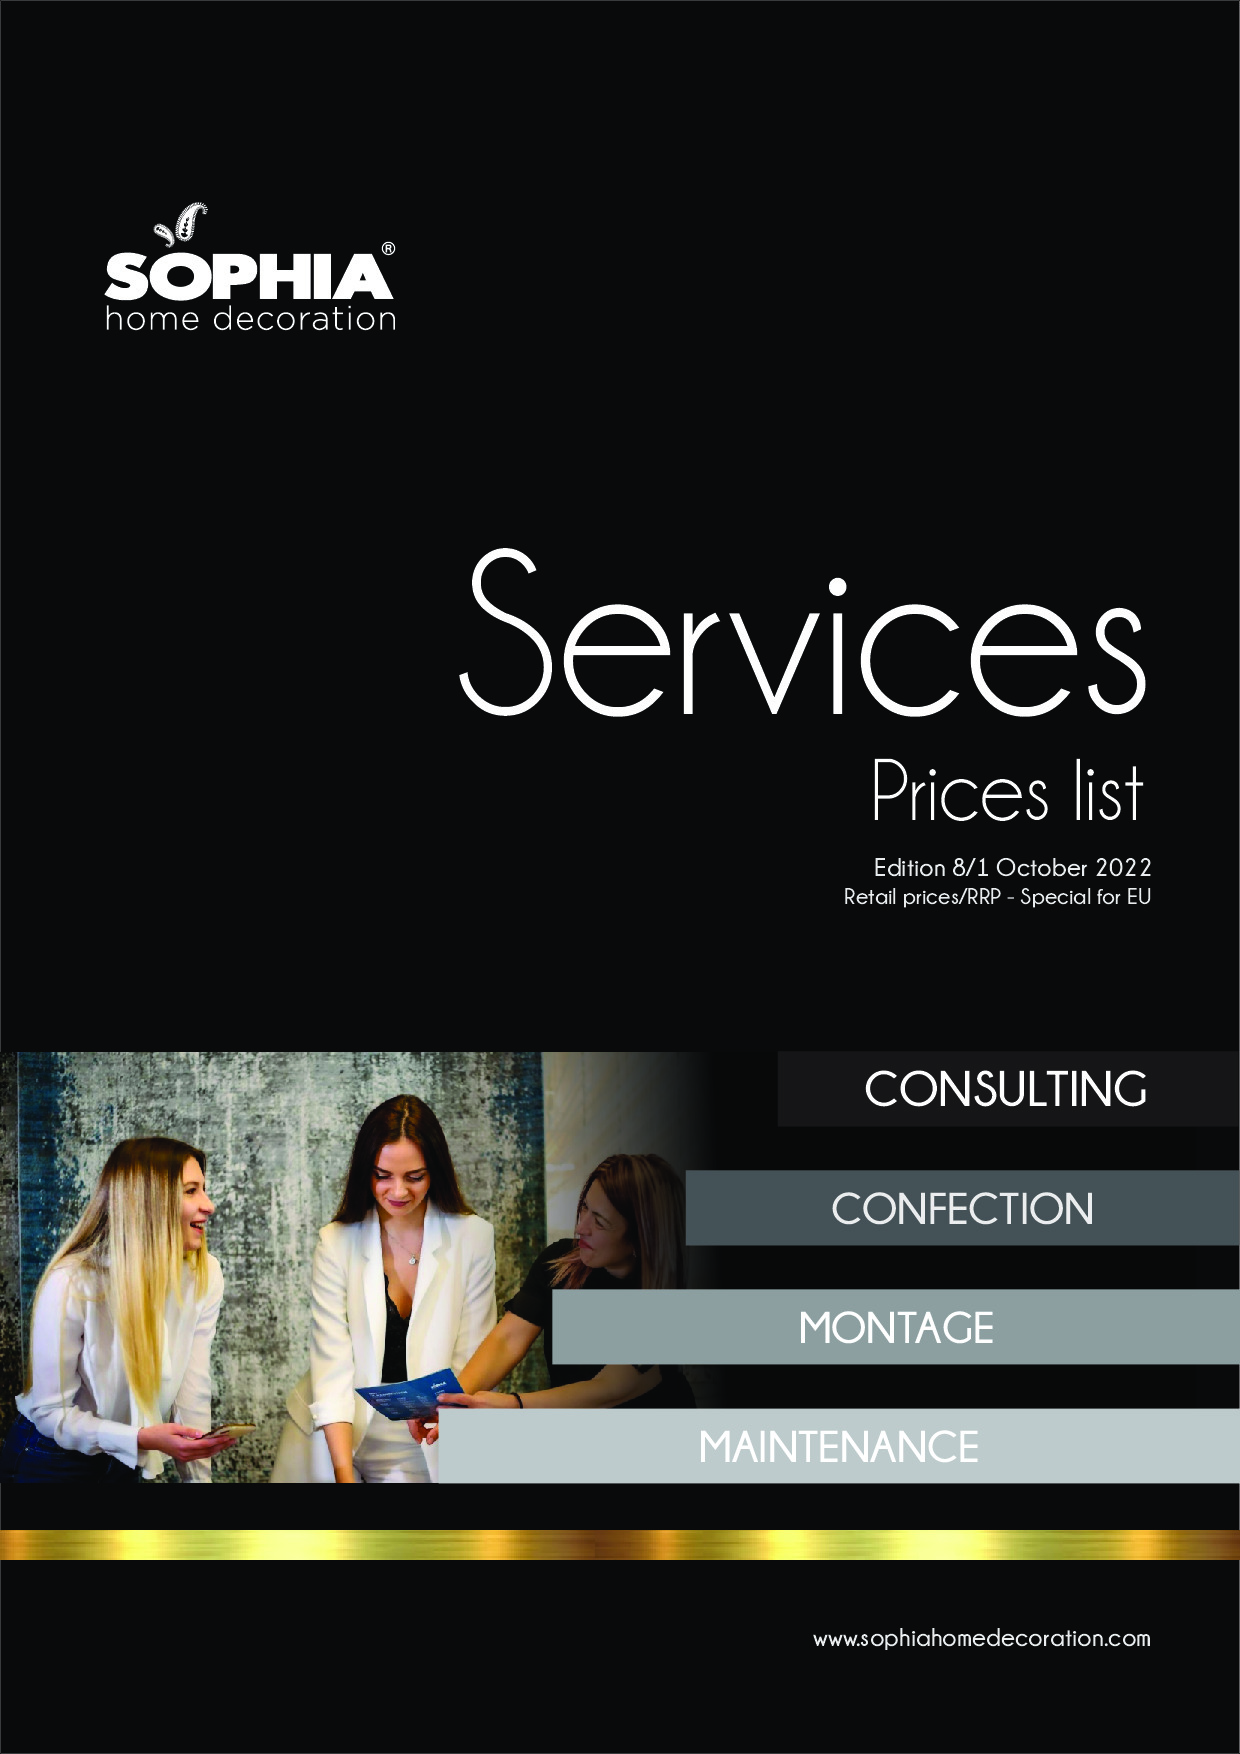 Services Price List